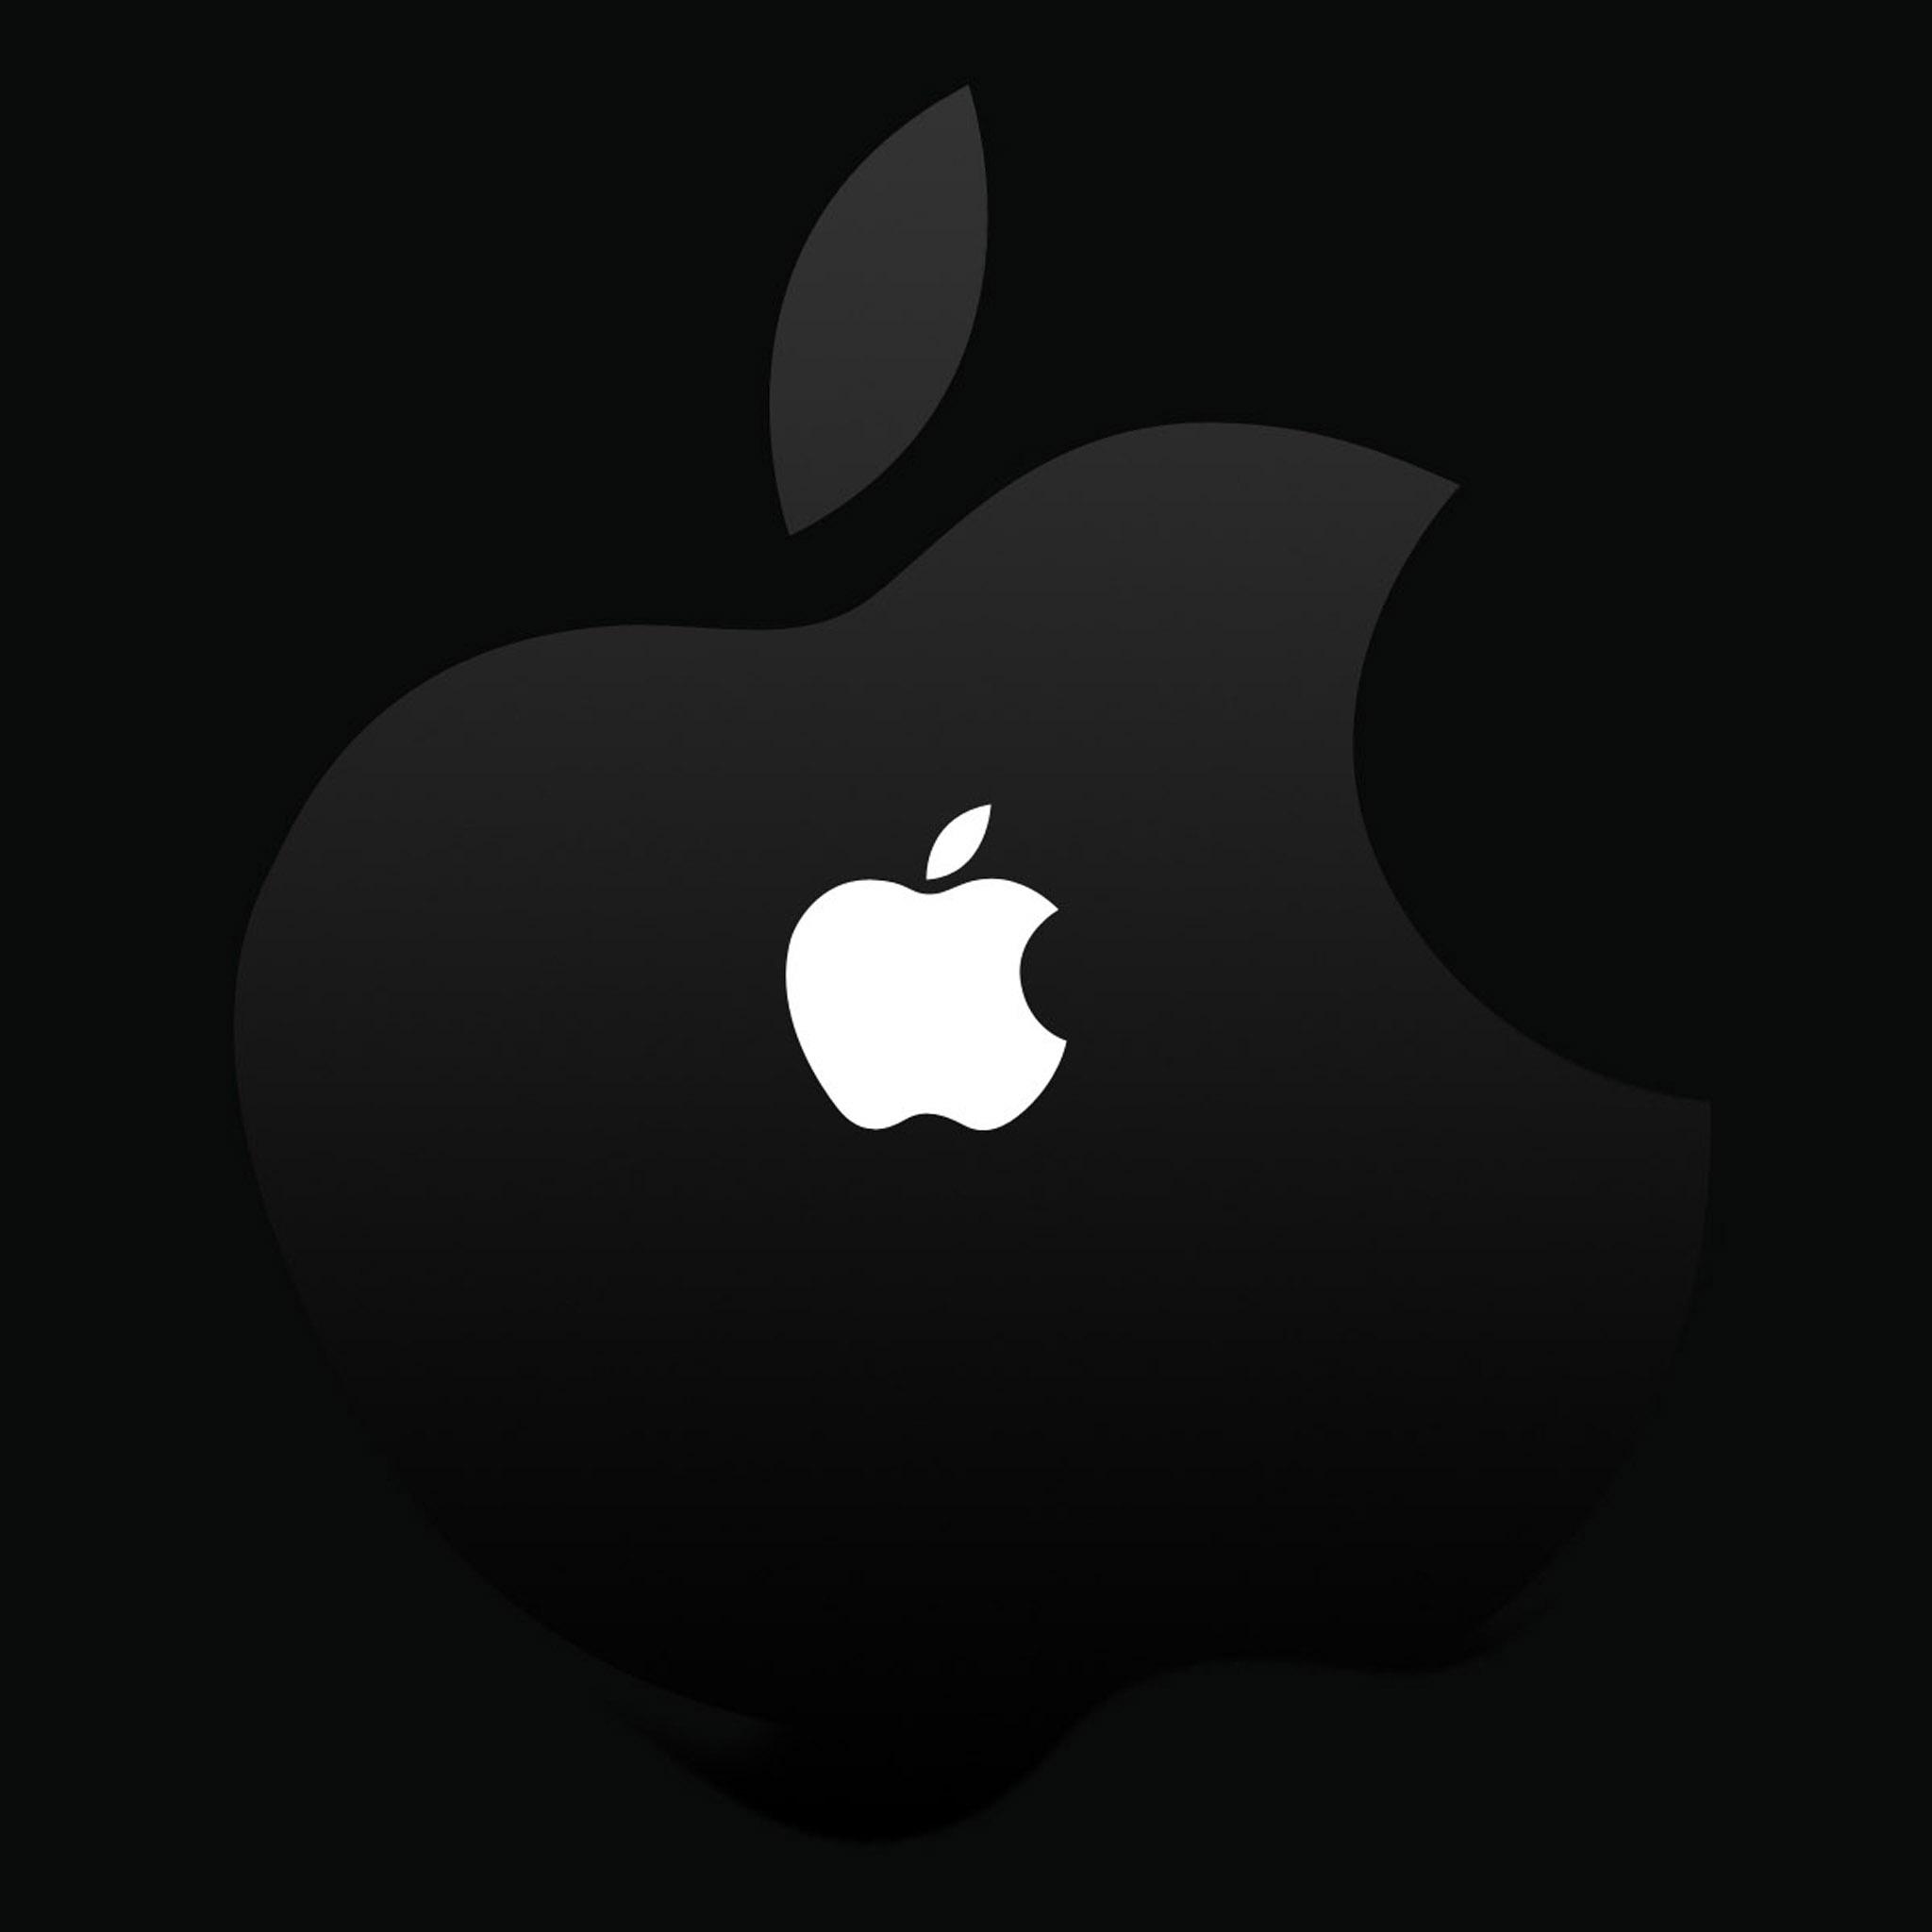 Black Apple logo iPad Air 2 Wallpapers | iPad Air 2 Wallpapers